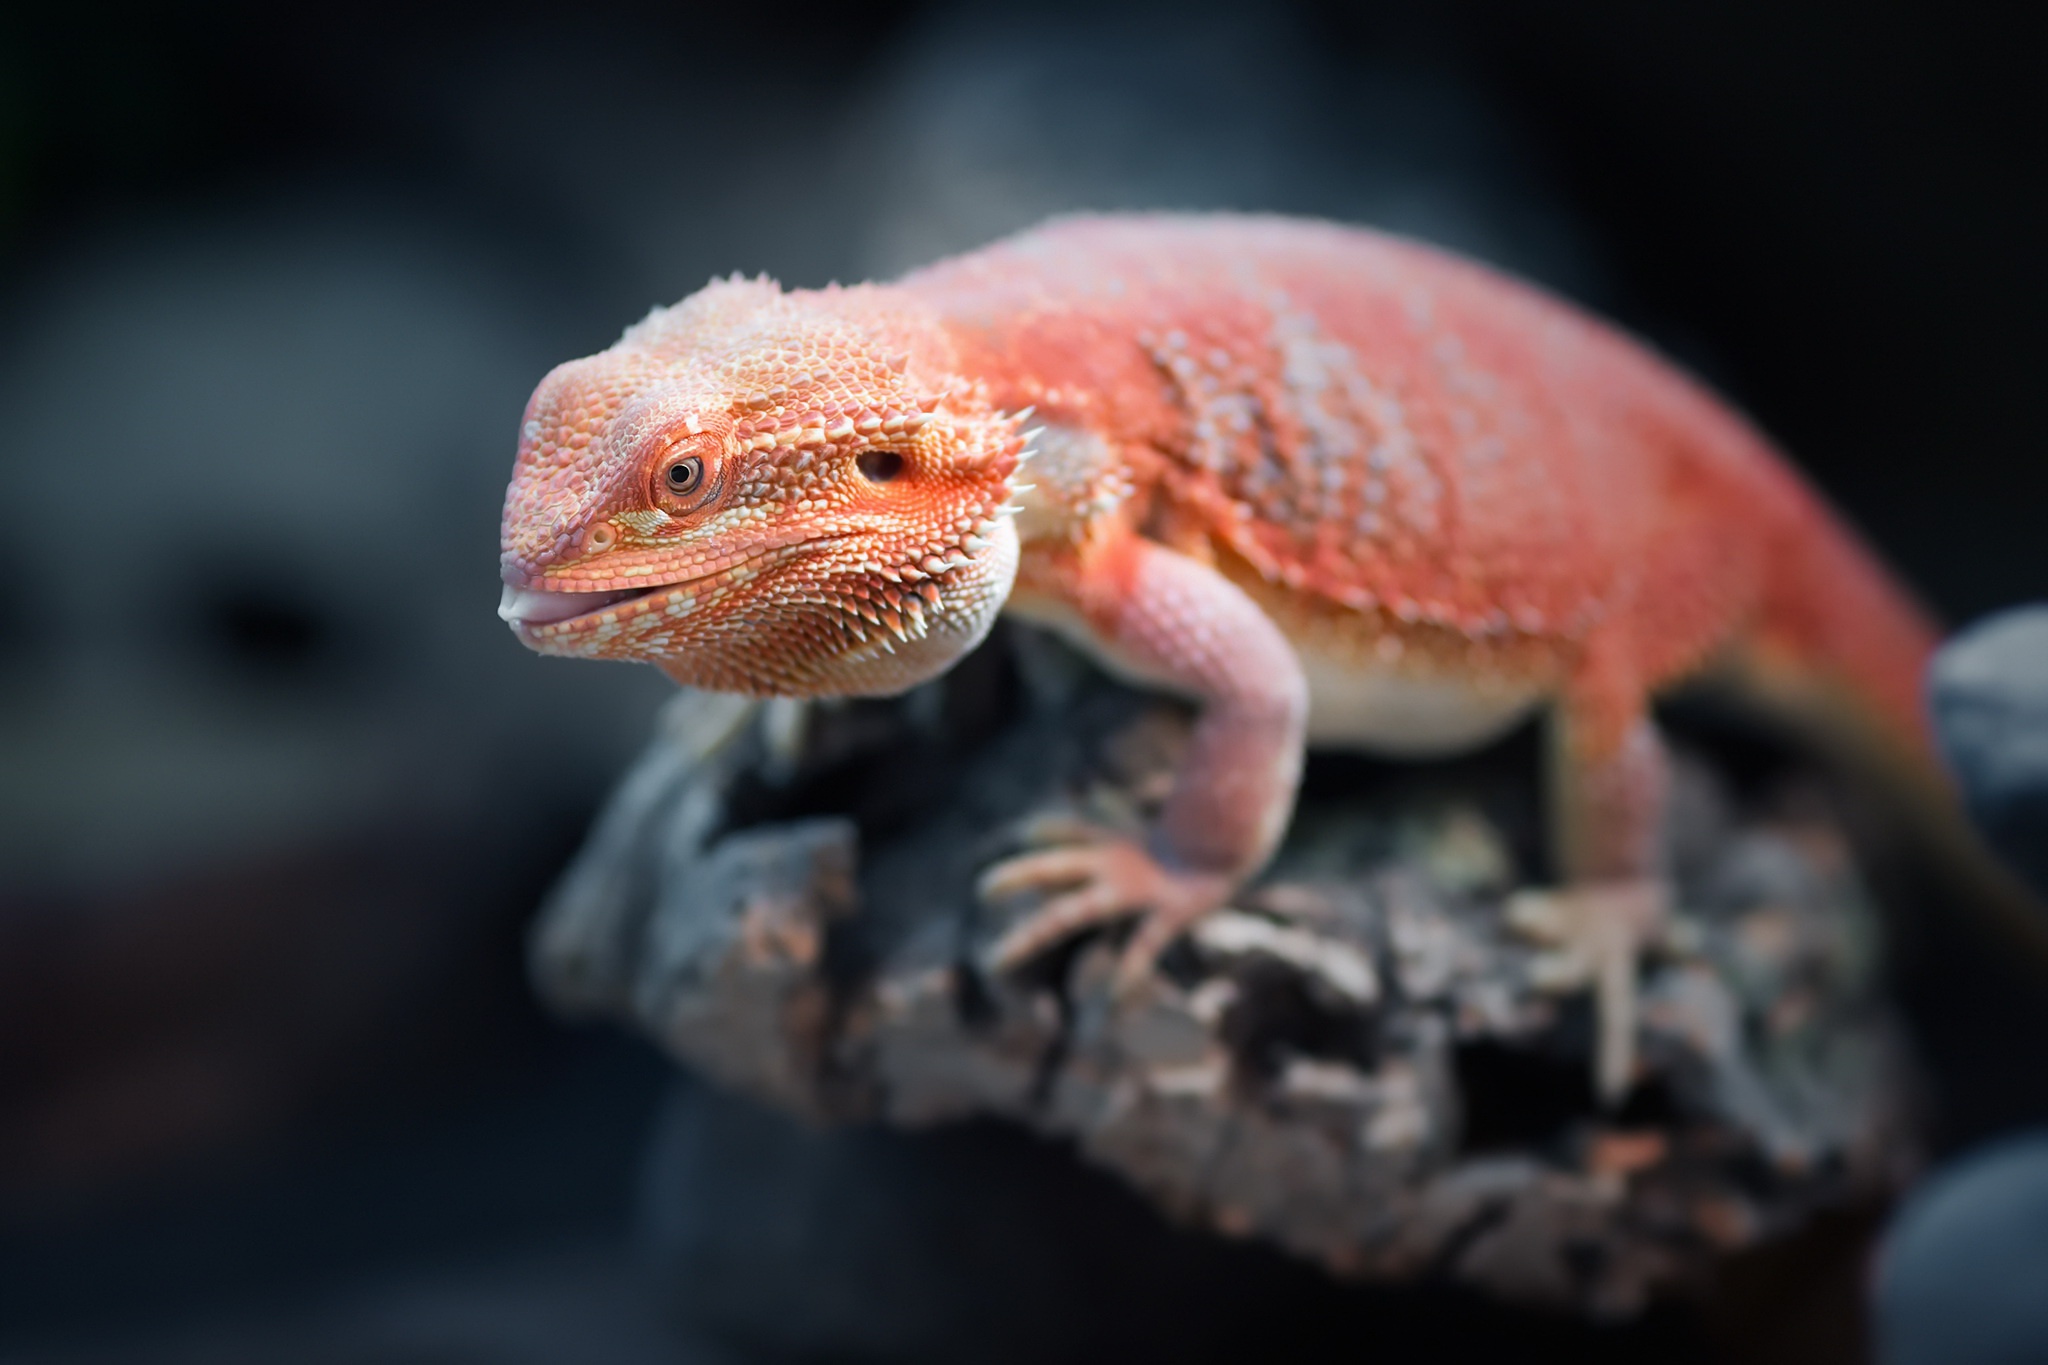 General 2048x1365 animals reptiles blurred orange Bearded Dragon closeup